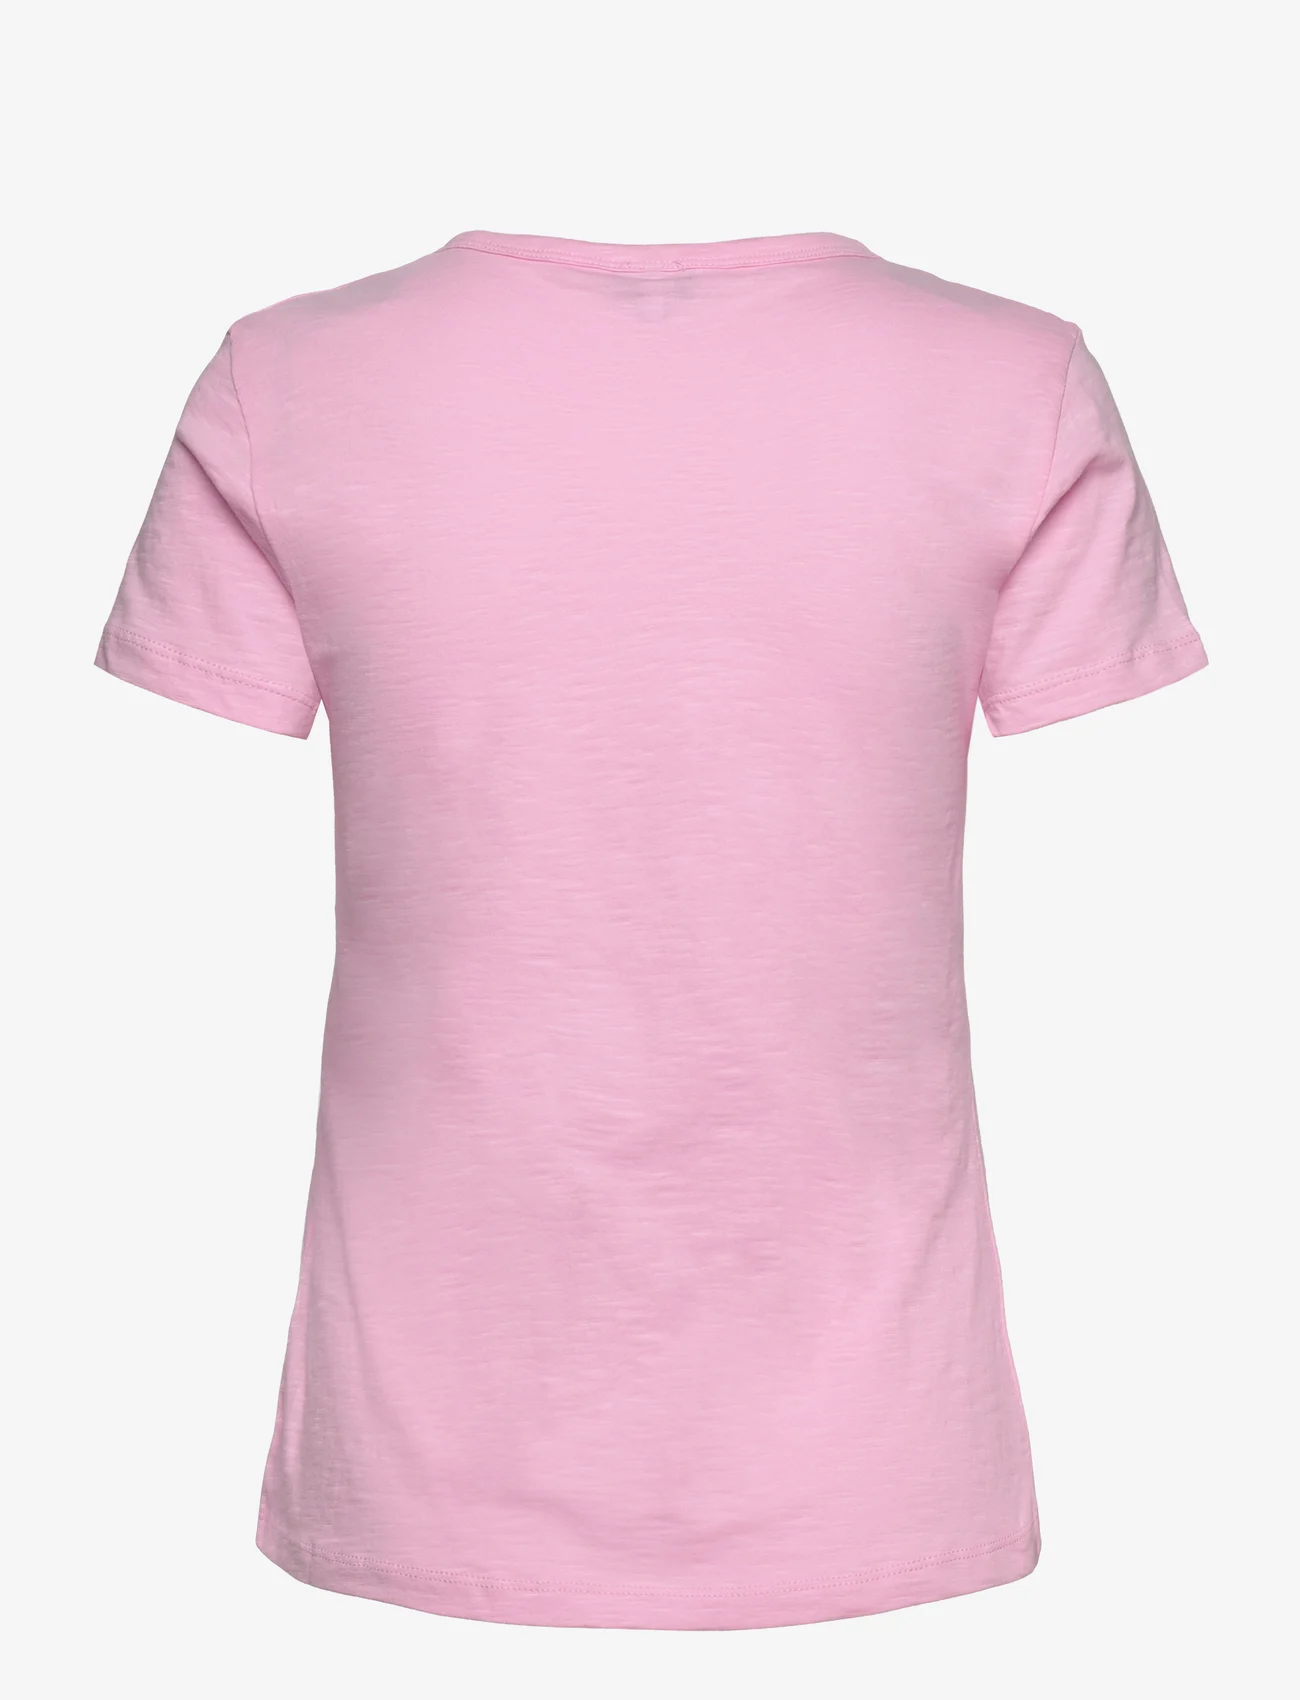 Tommy Hilfiger - 1985 SLIM SLUB C-NK SS - t-shirts & tops - iconic pink - 1